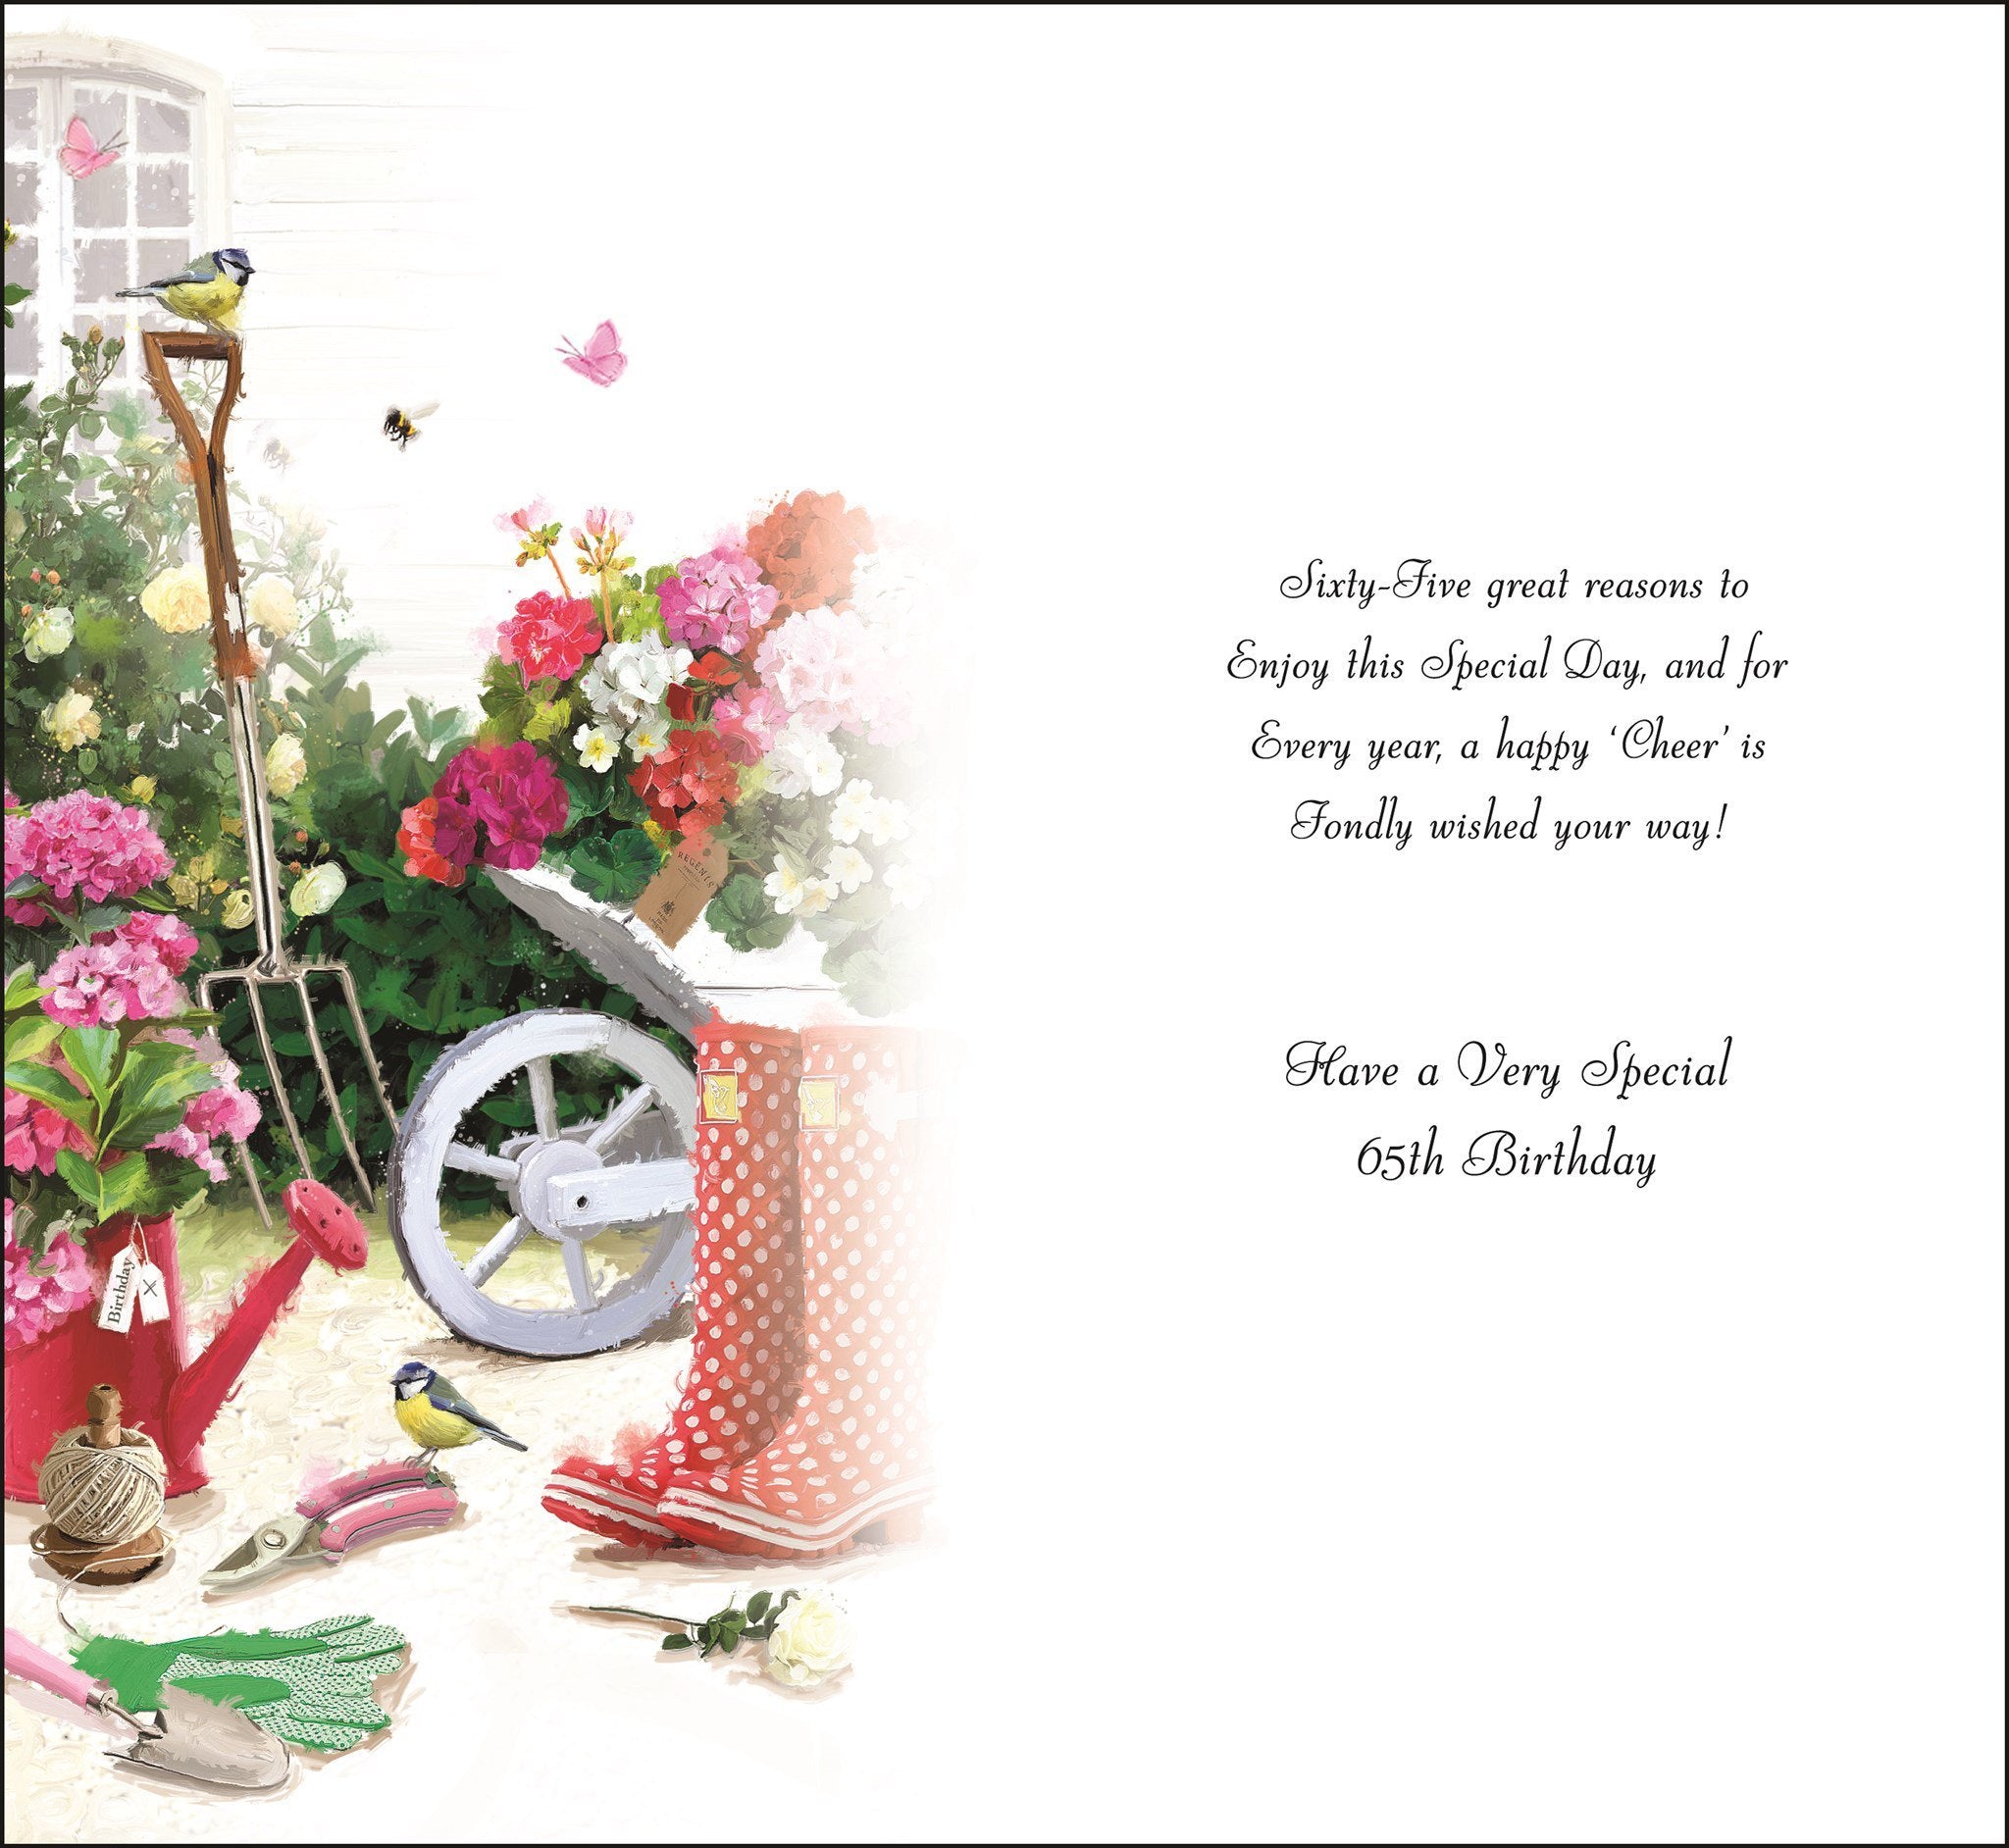 Inside of 65th Birthday Gardening Tools Greetings Card